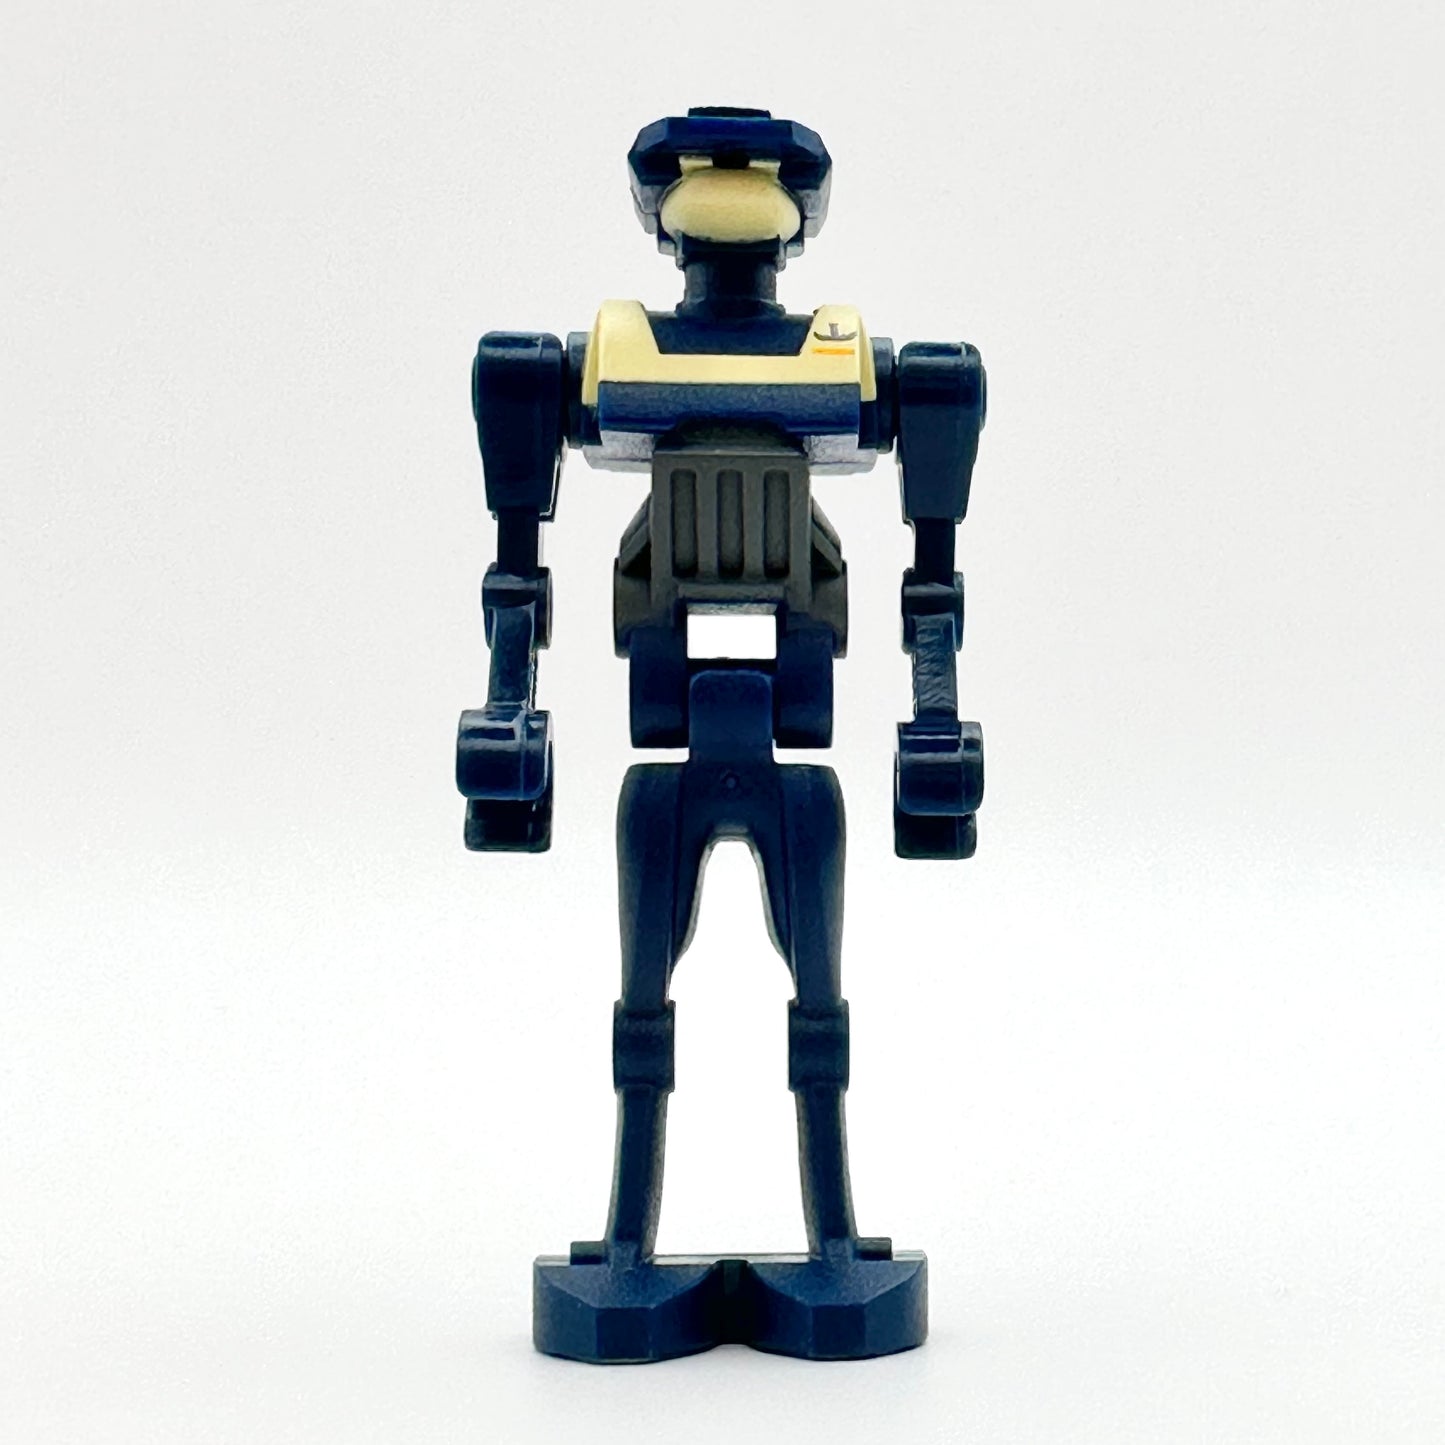 LEGO Tactical Droid Minifigure